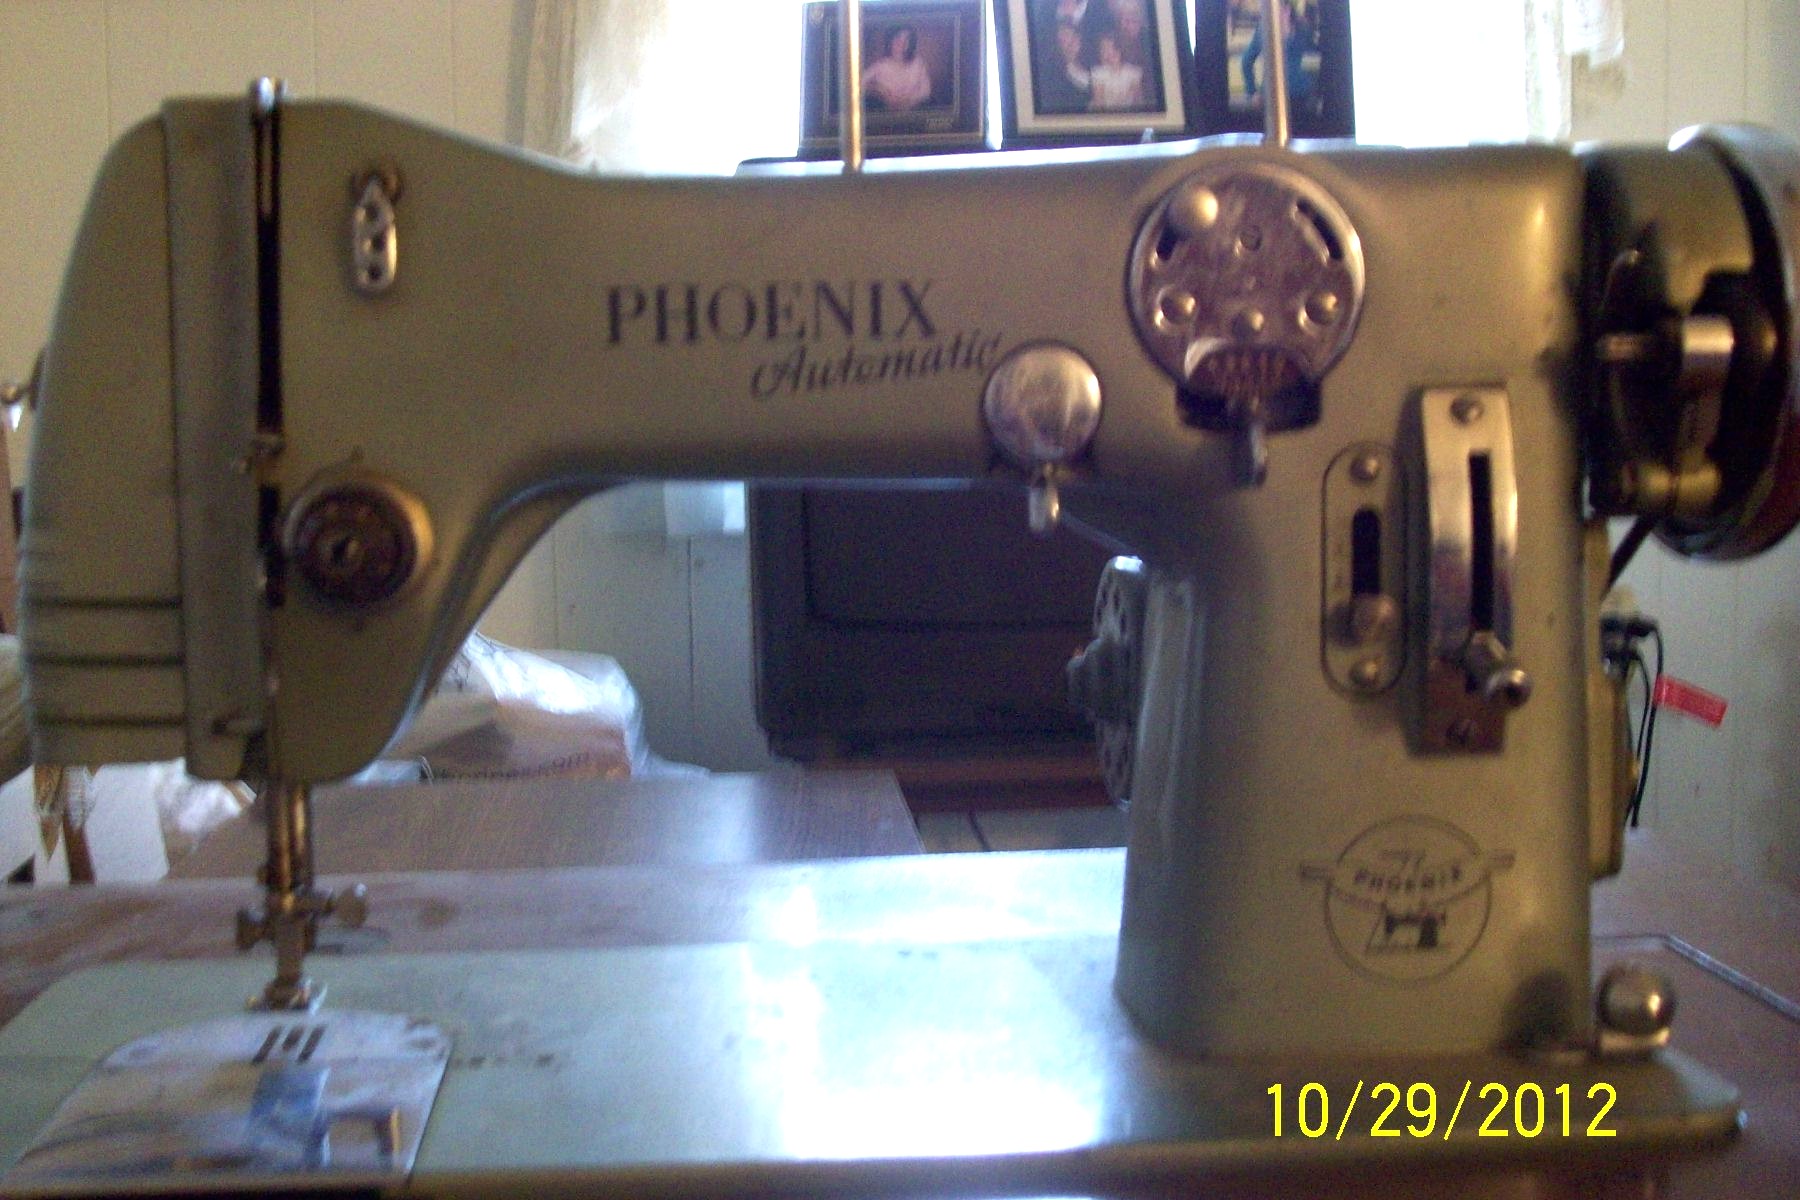 Phoenix sewing machine where was it made